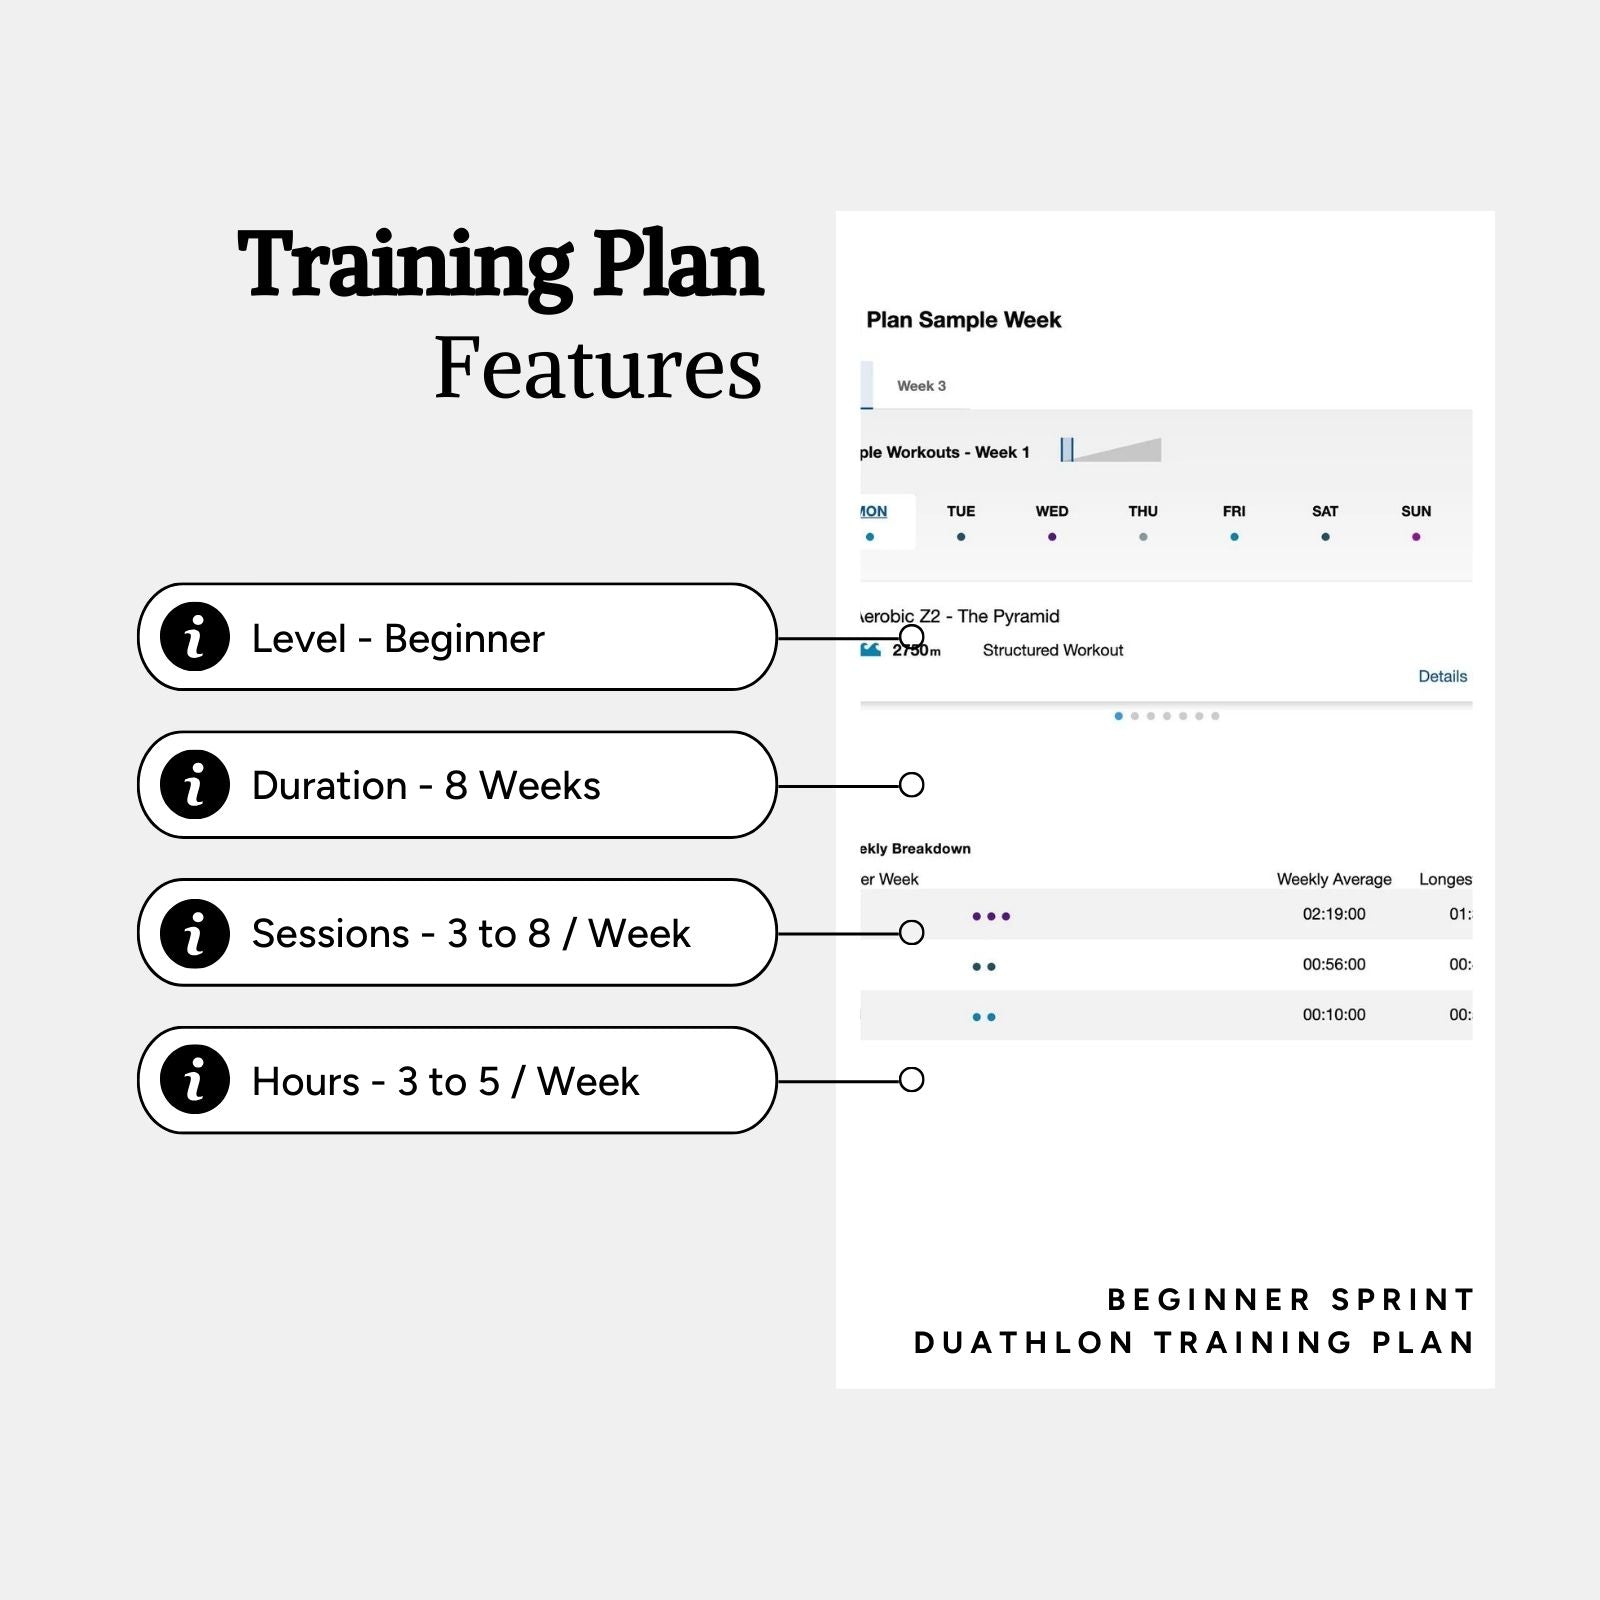 Brownlee Fitness Beginner Sprint Duathlon Training Plan